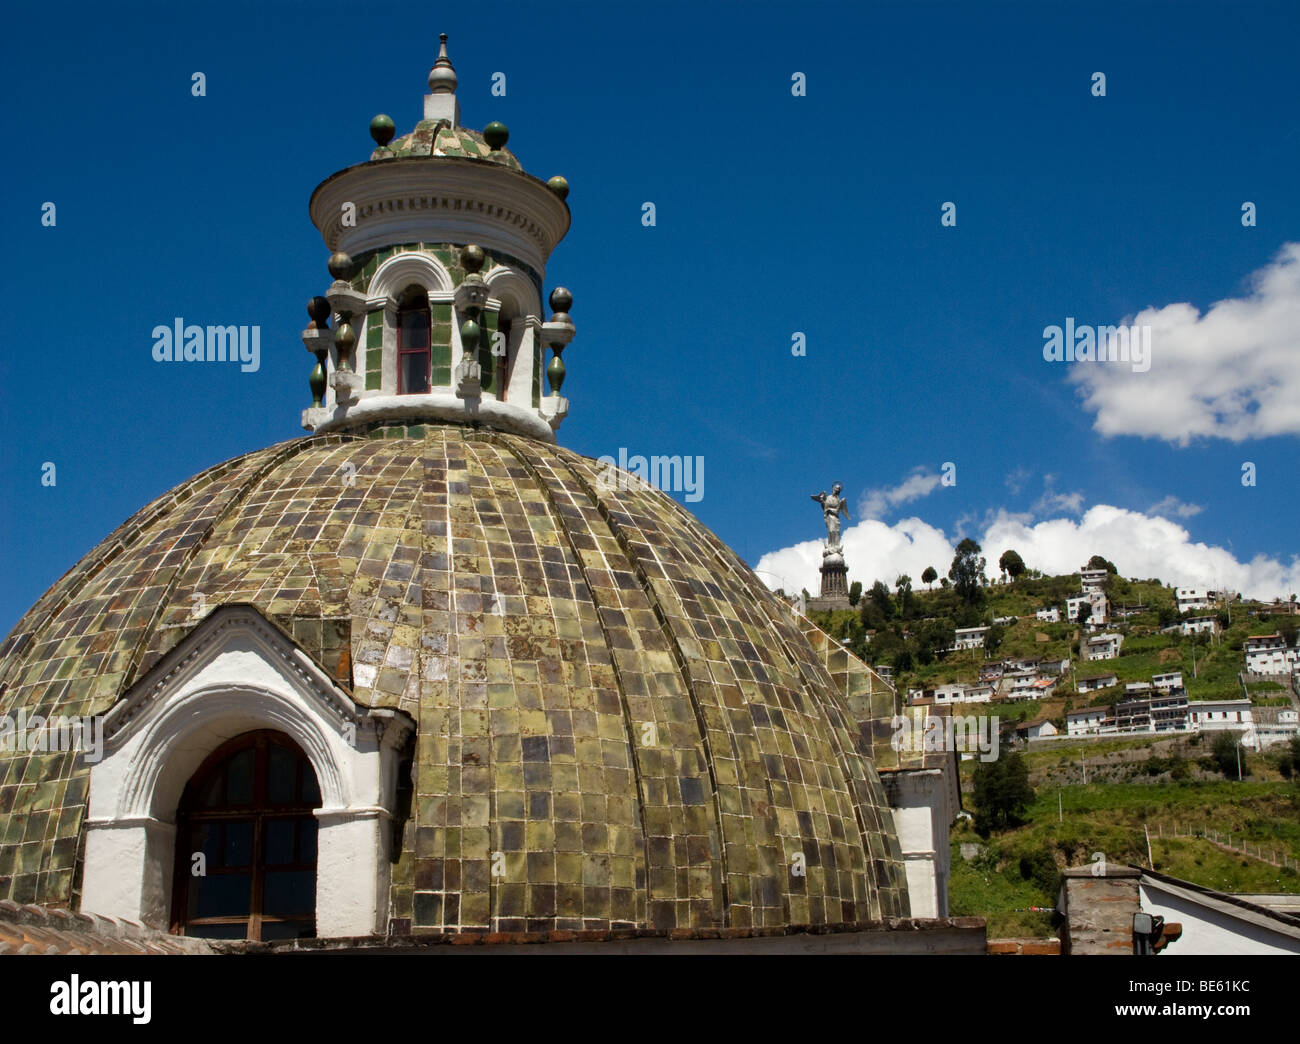 Ecuador.Quito.Dome of The Old Hospital San Juan de Dios (XVI century) current City Museum.Virgin of Quito in background. Stock Photo